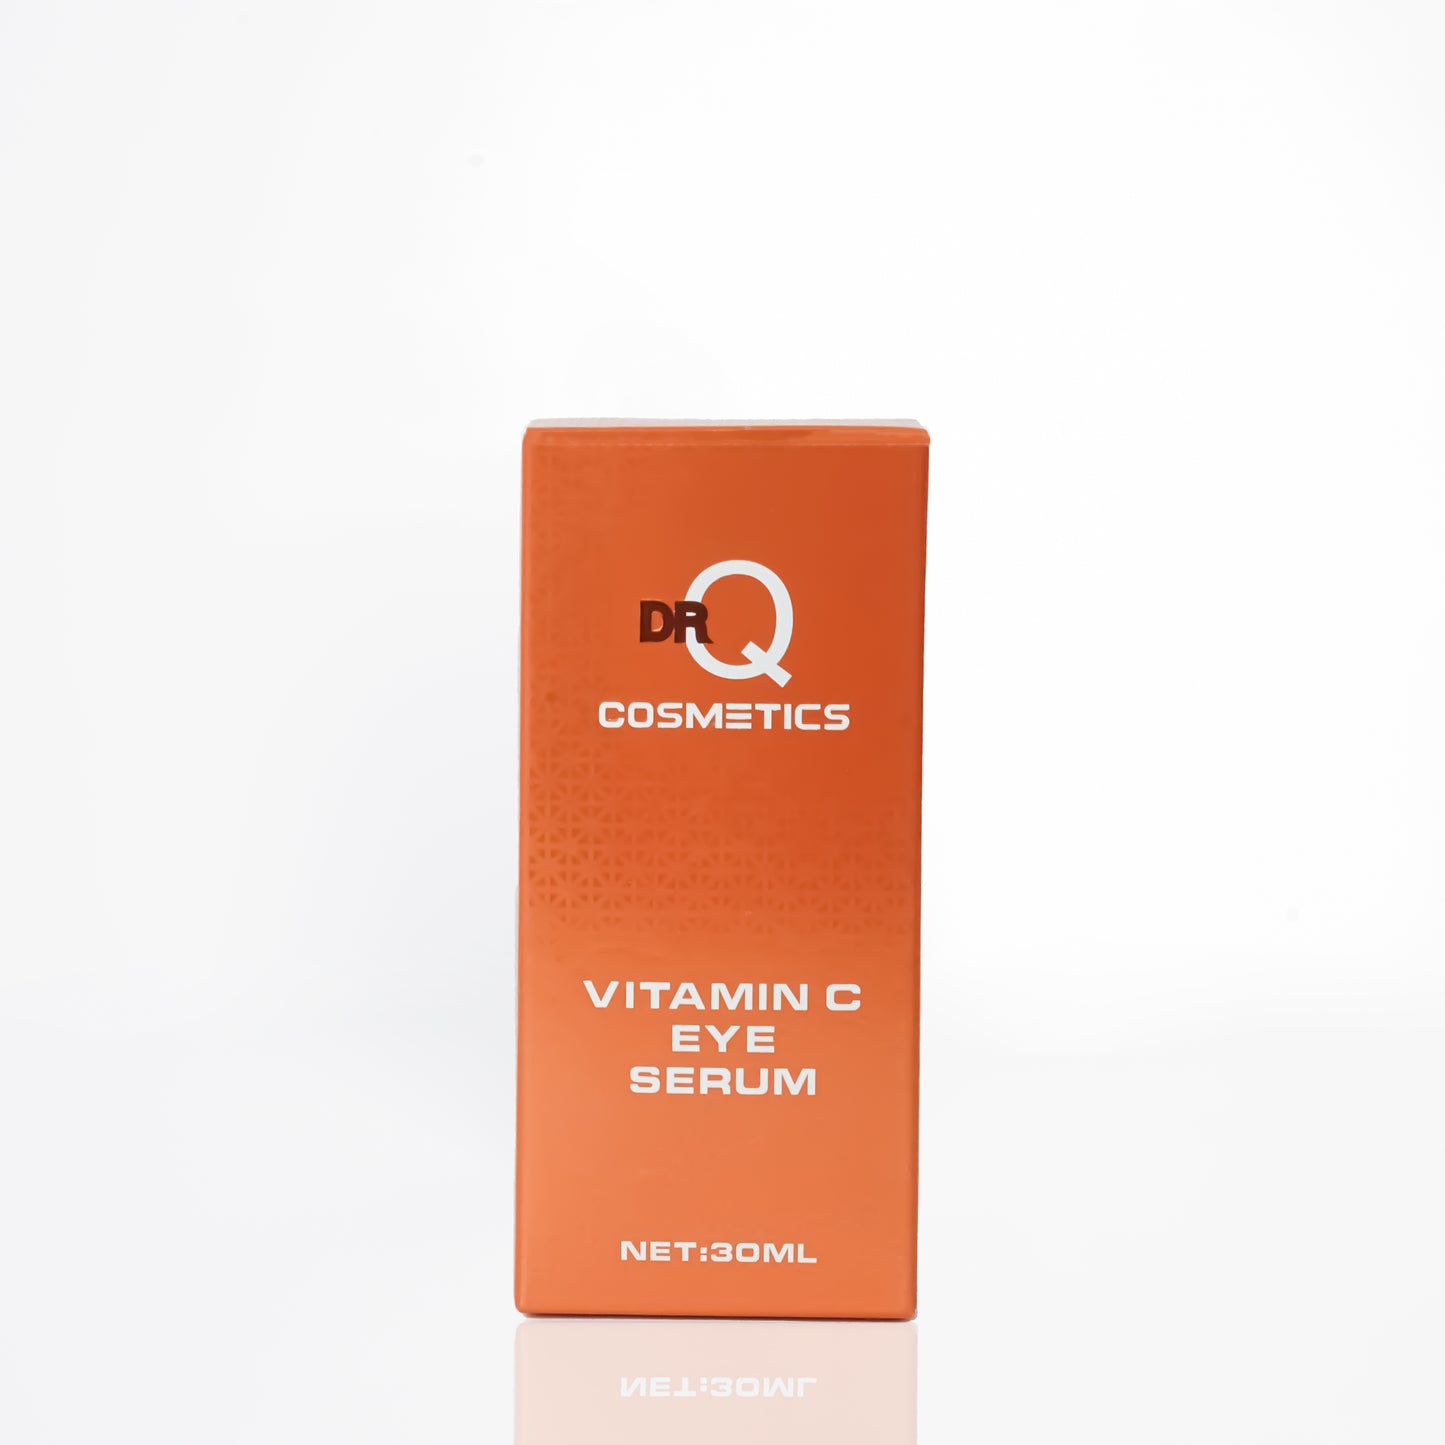 Vitamin C Light & Bright Eye Serum